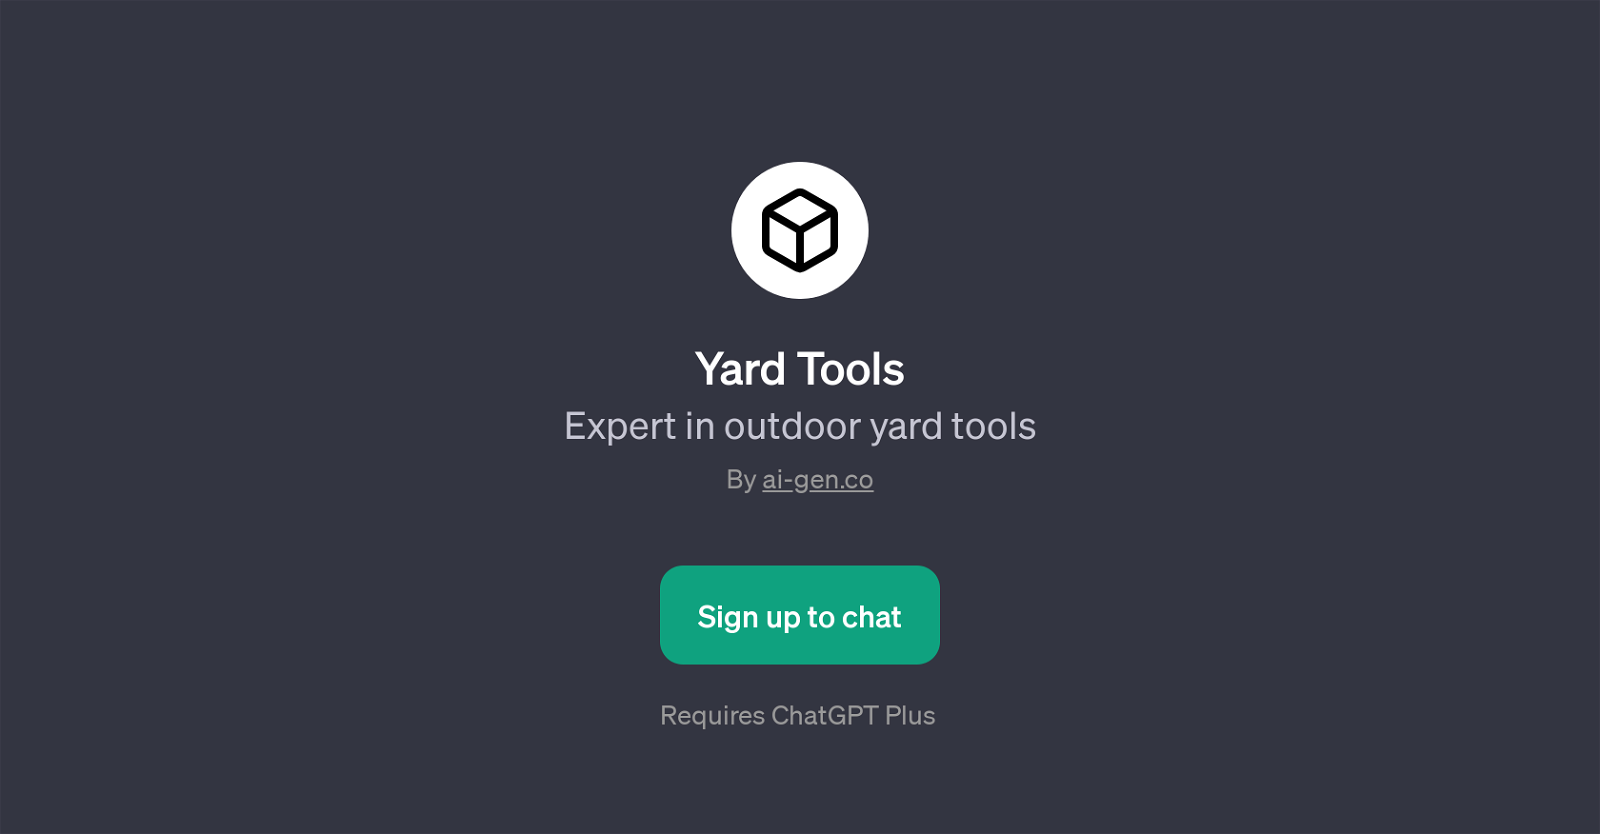 Yard Tools website